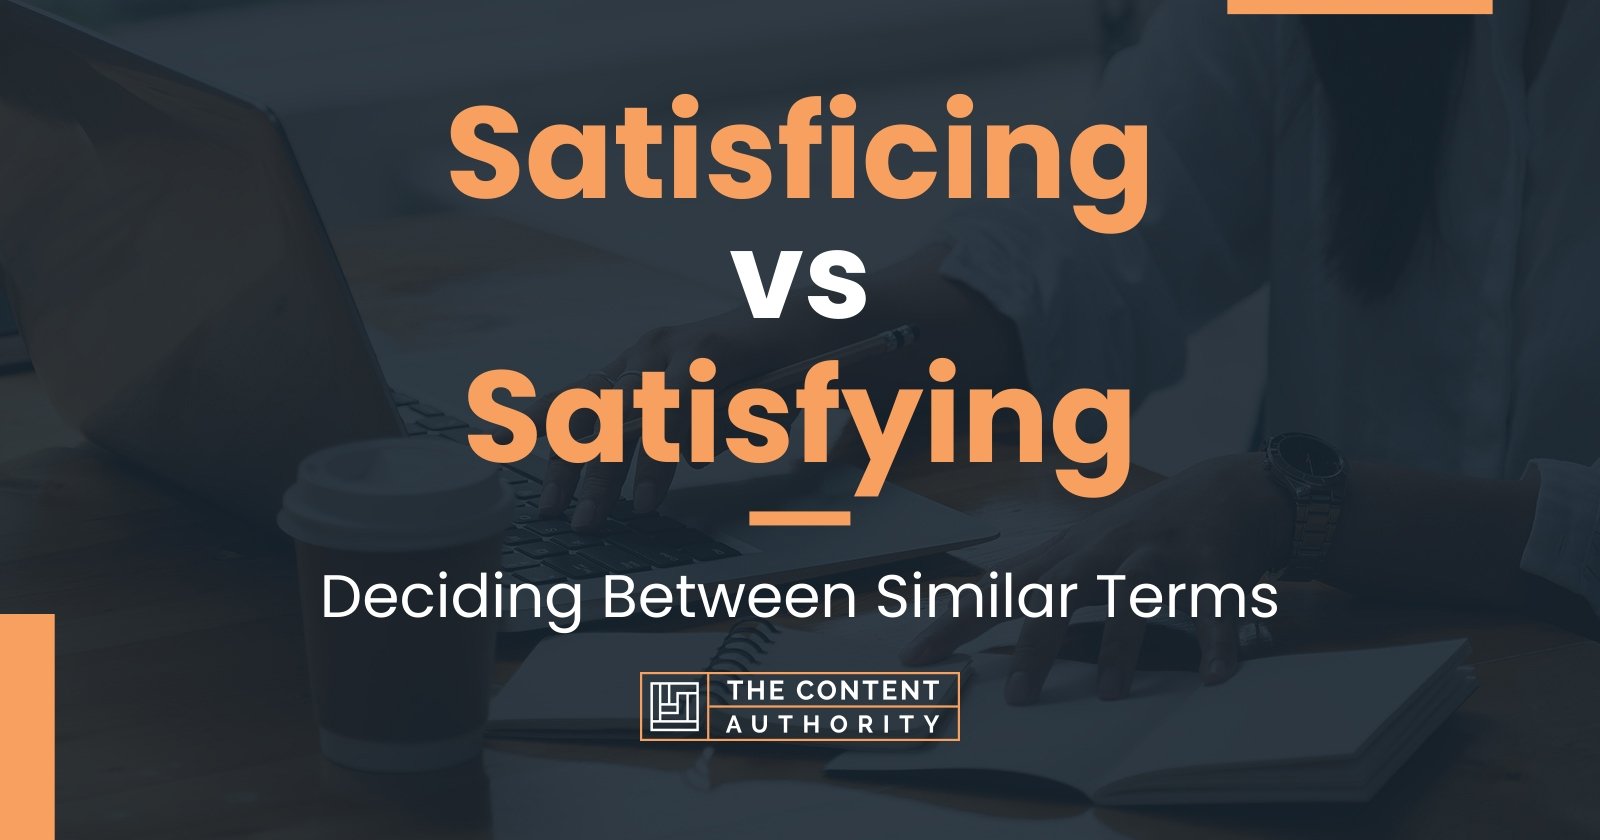 Satisficing vs Satisfying: Deciding Between Similar Terms